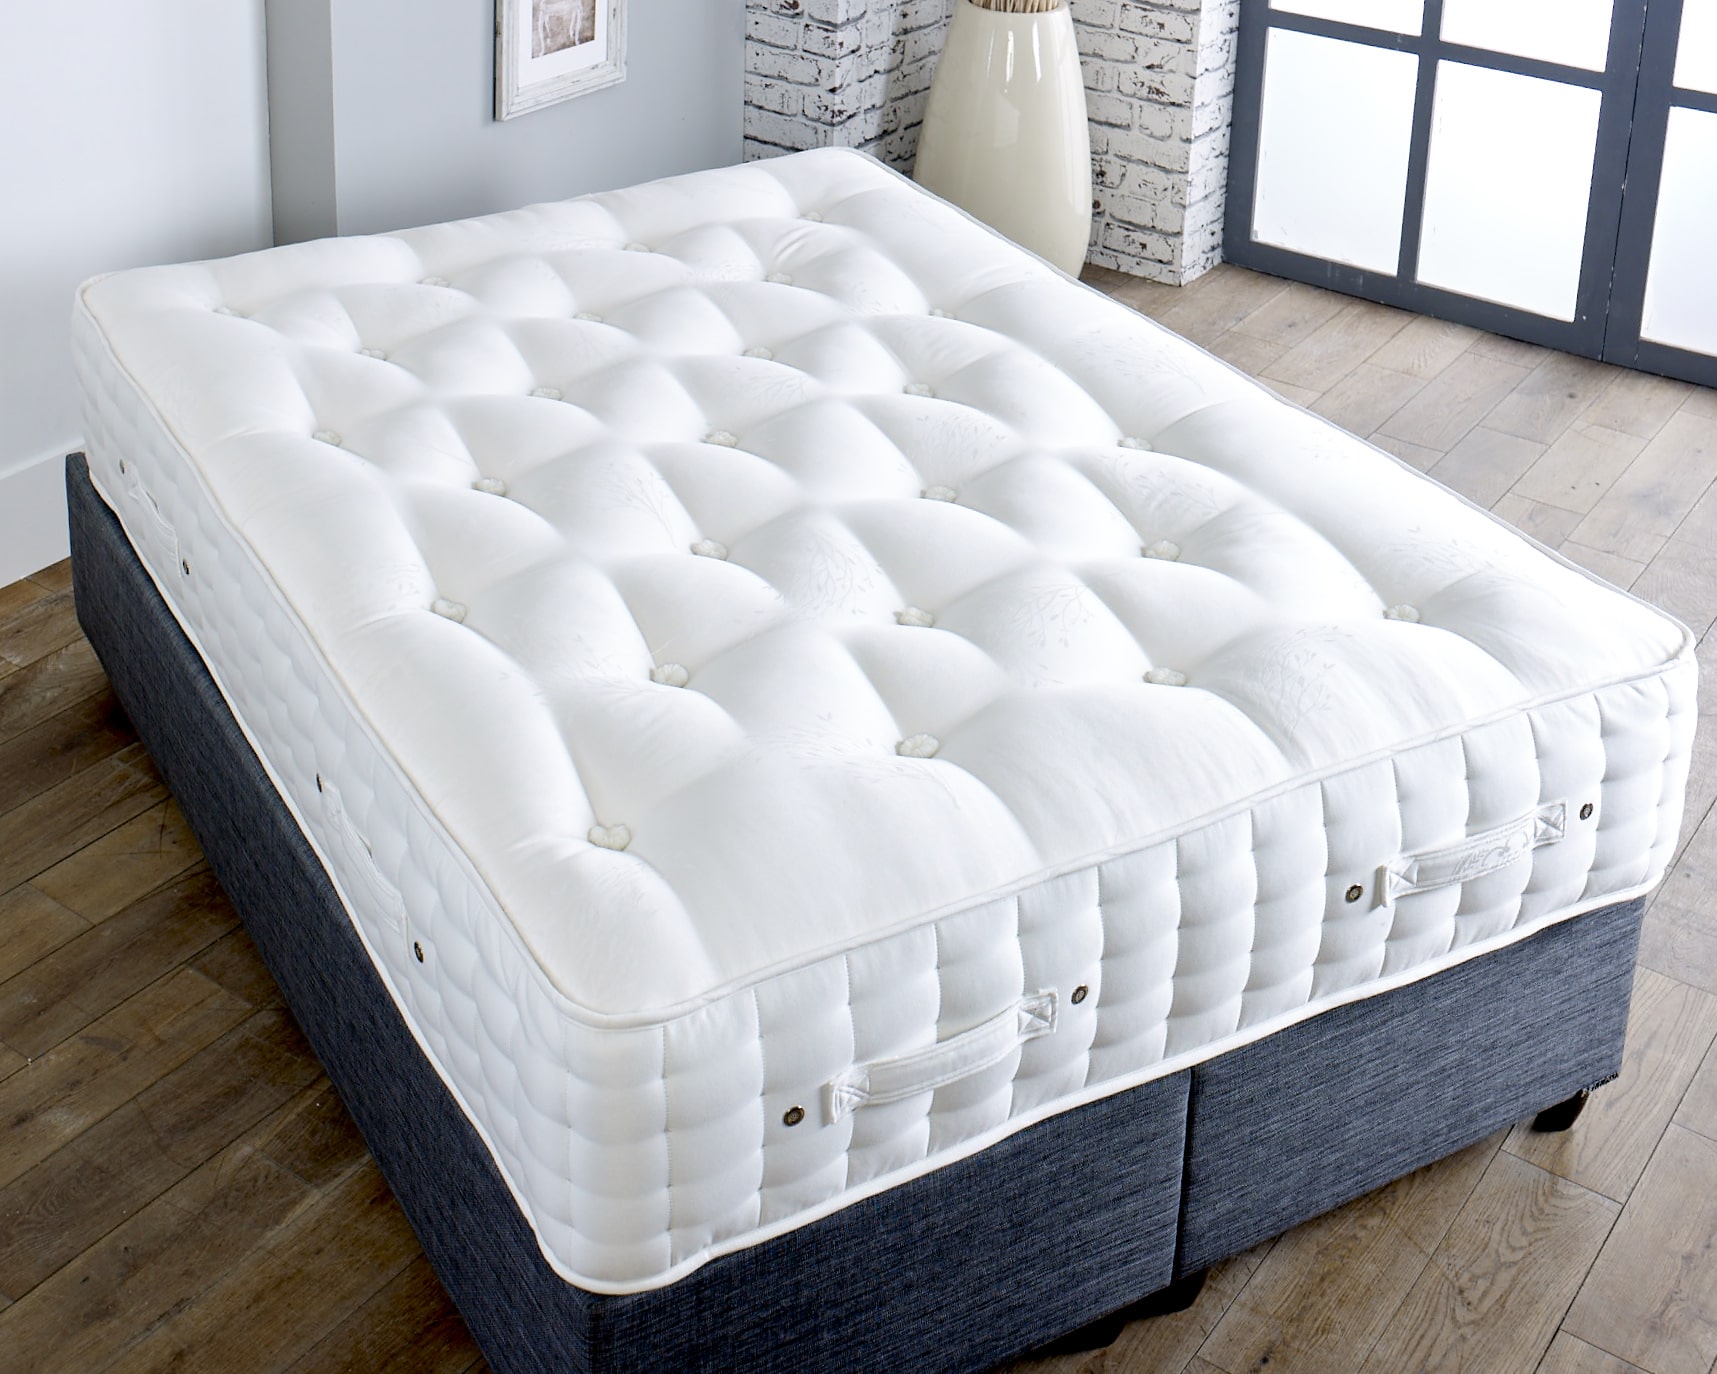 3000 regale pocket mattress reviews